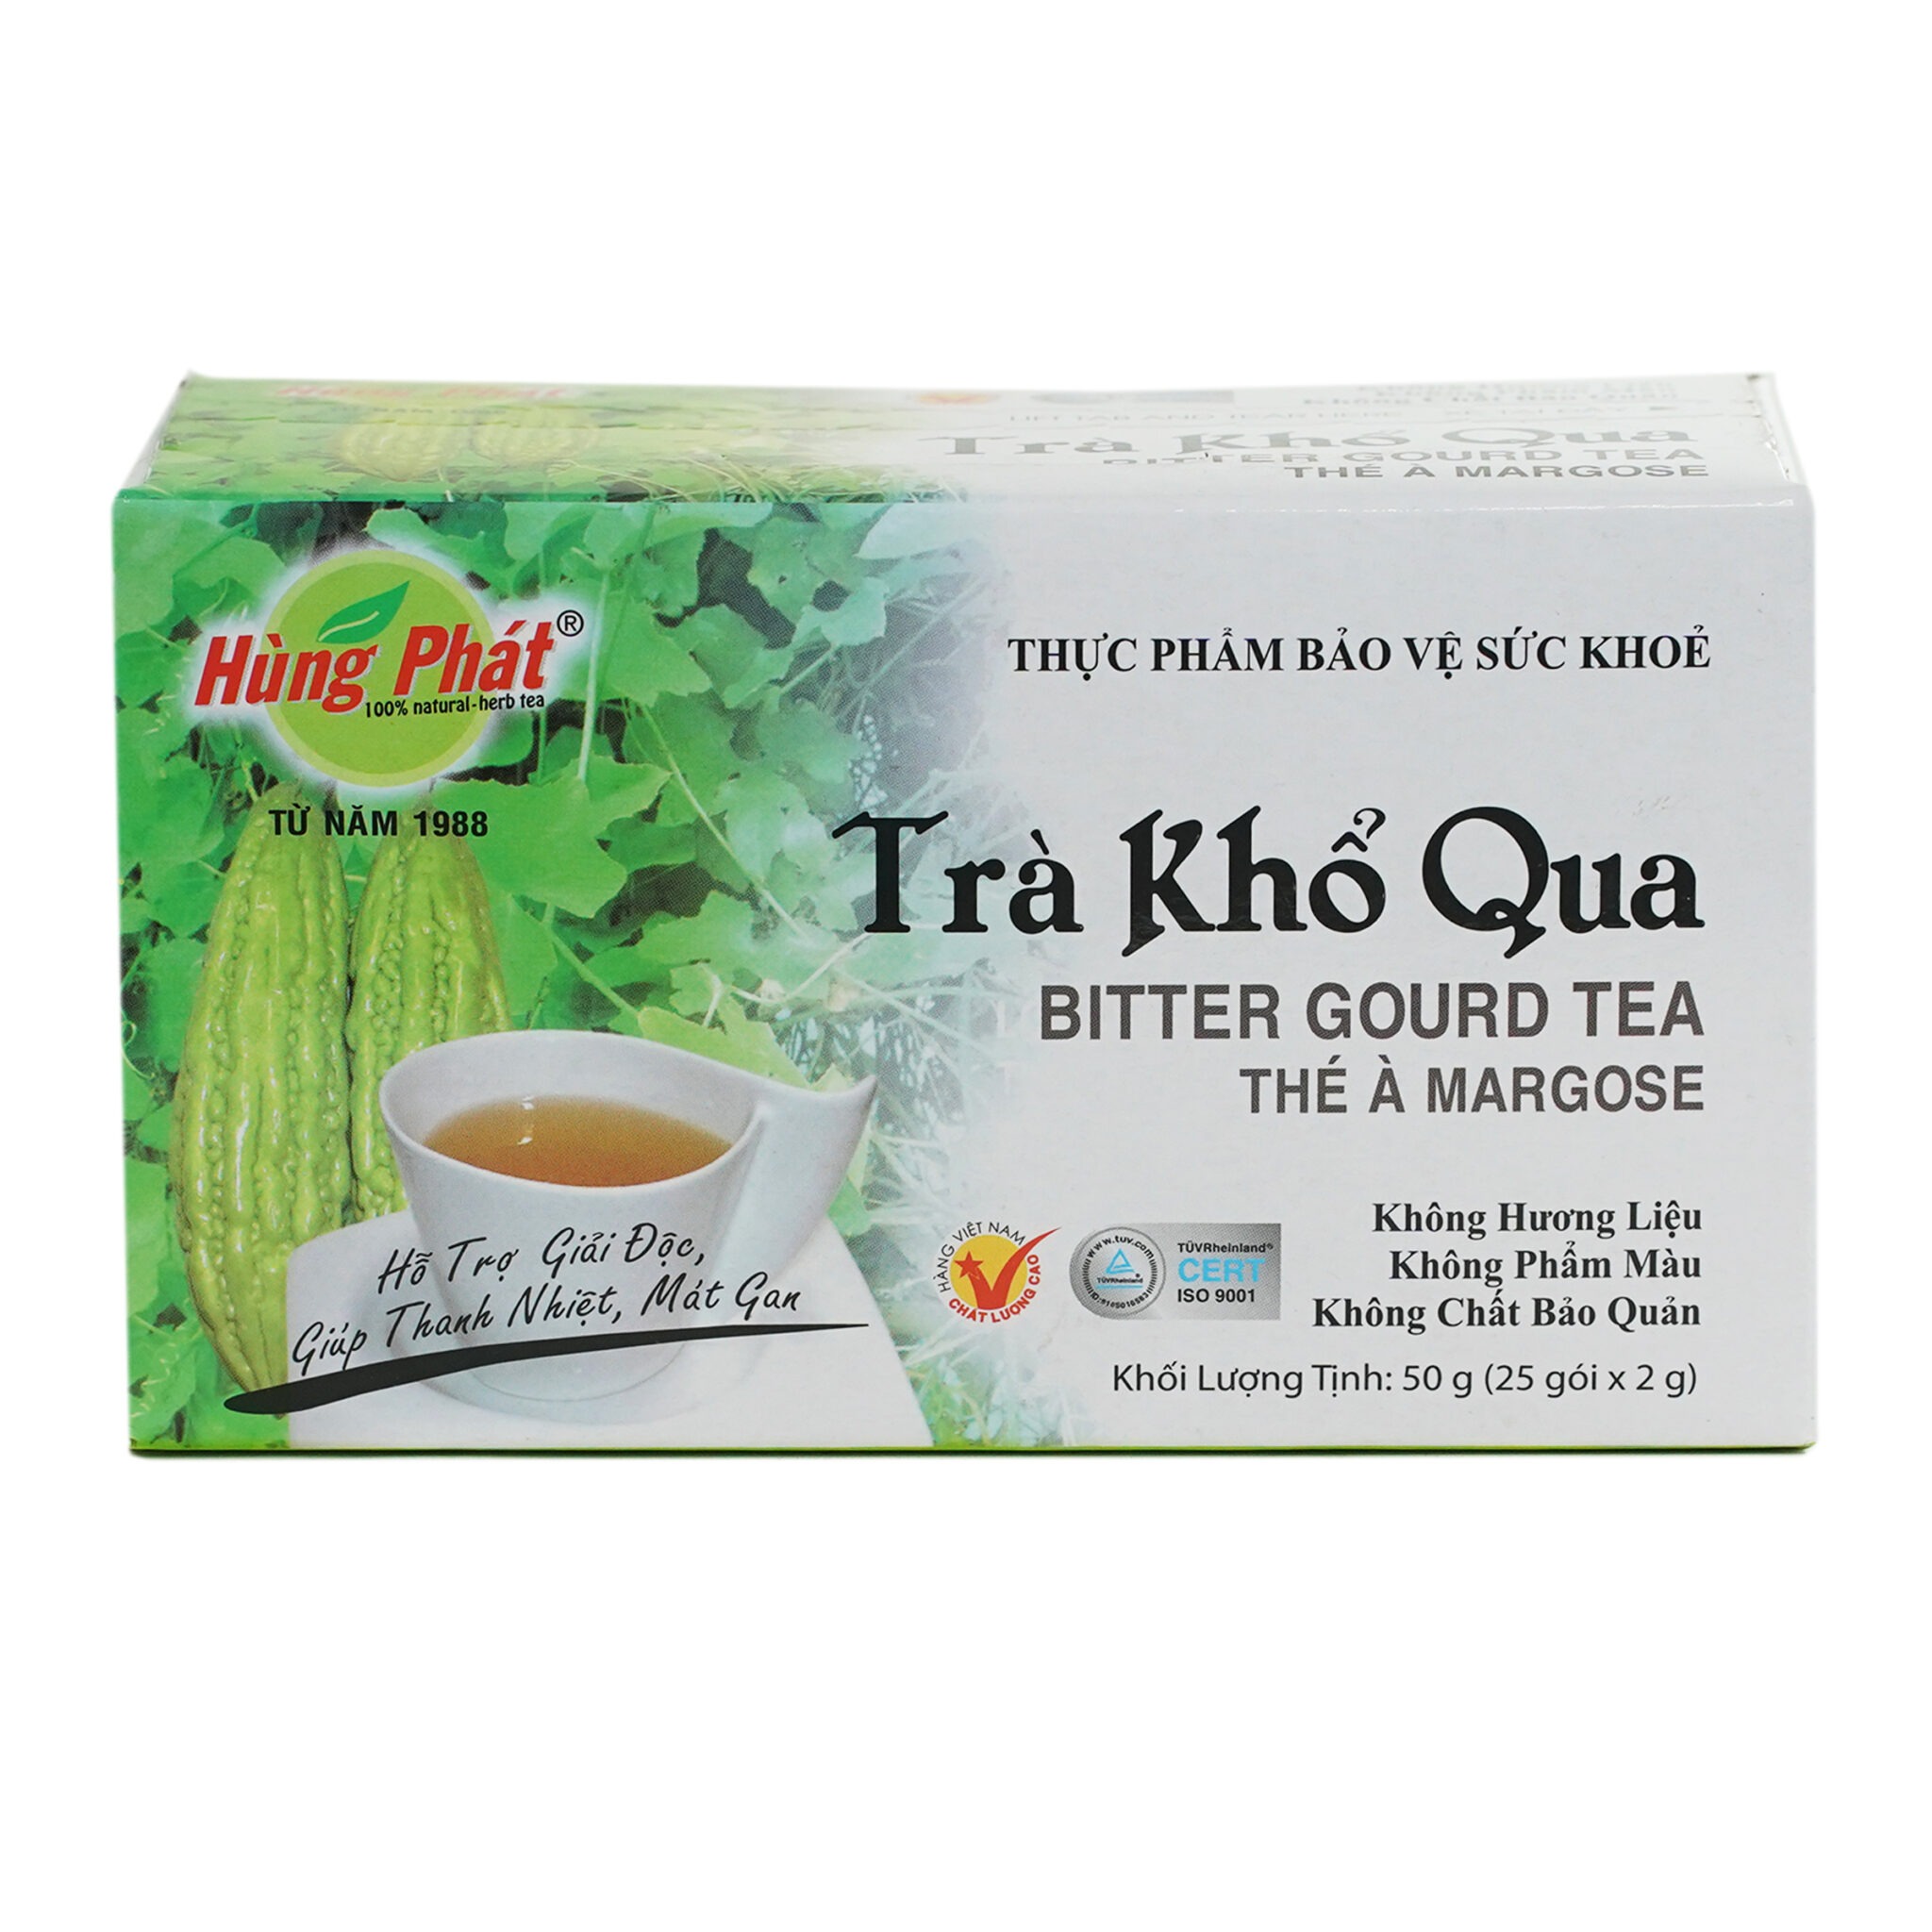 Hung Phat Bitter Gourd Tea (Tra Kho Qua) 1.75 oz, 10-Boxes (10-Packs ...